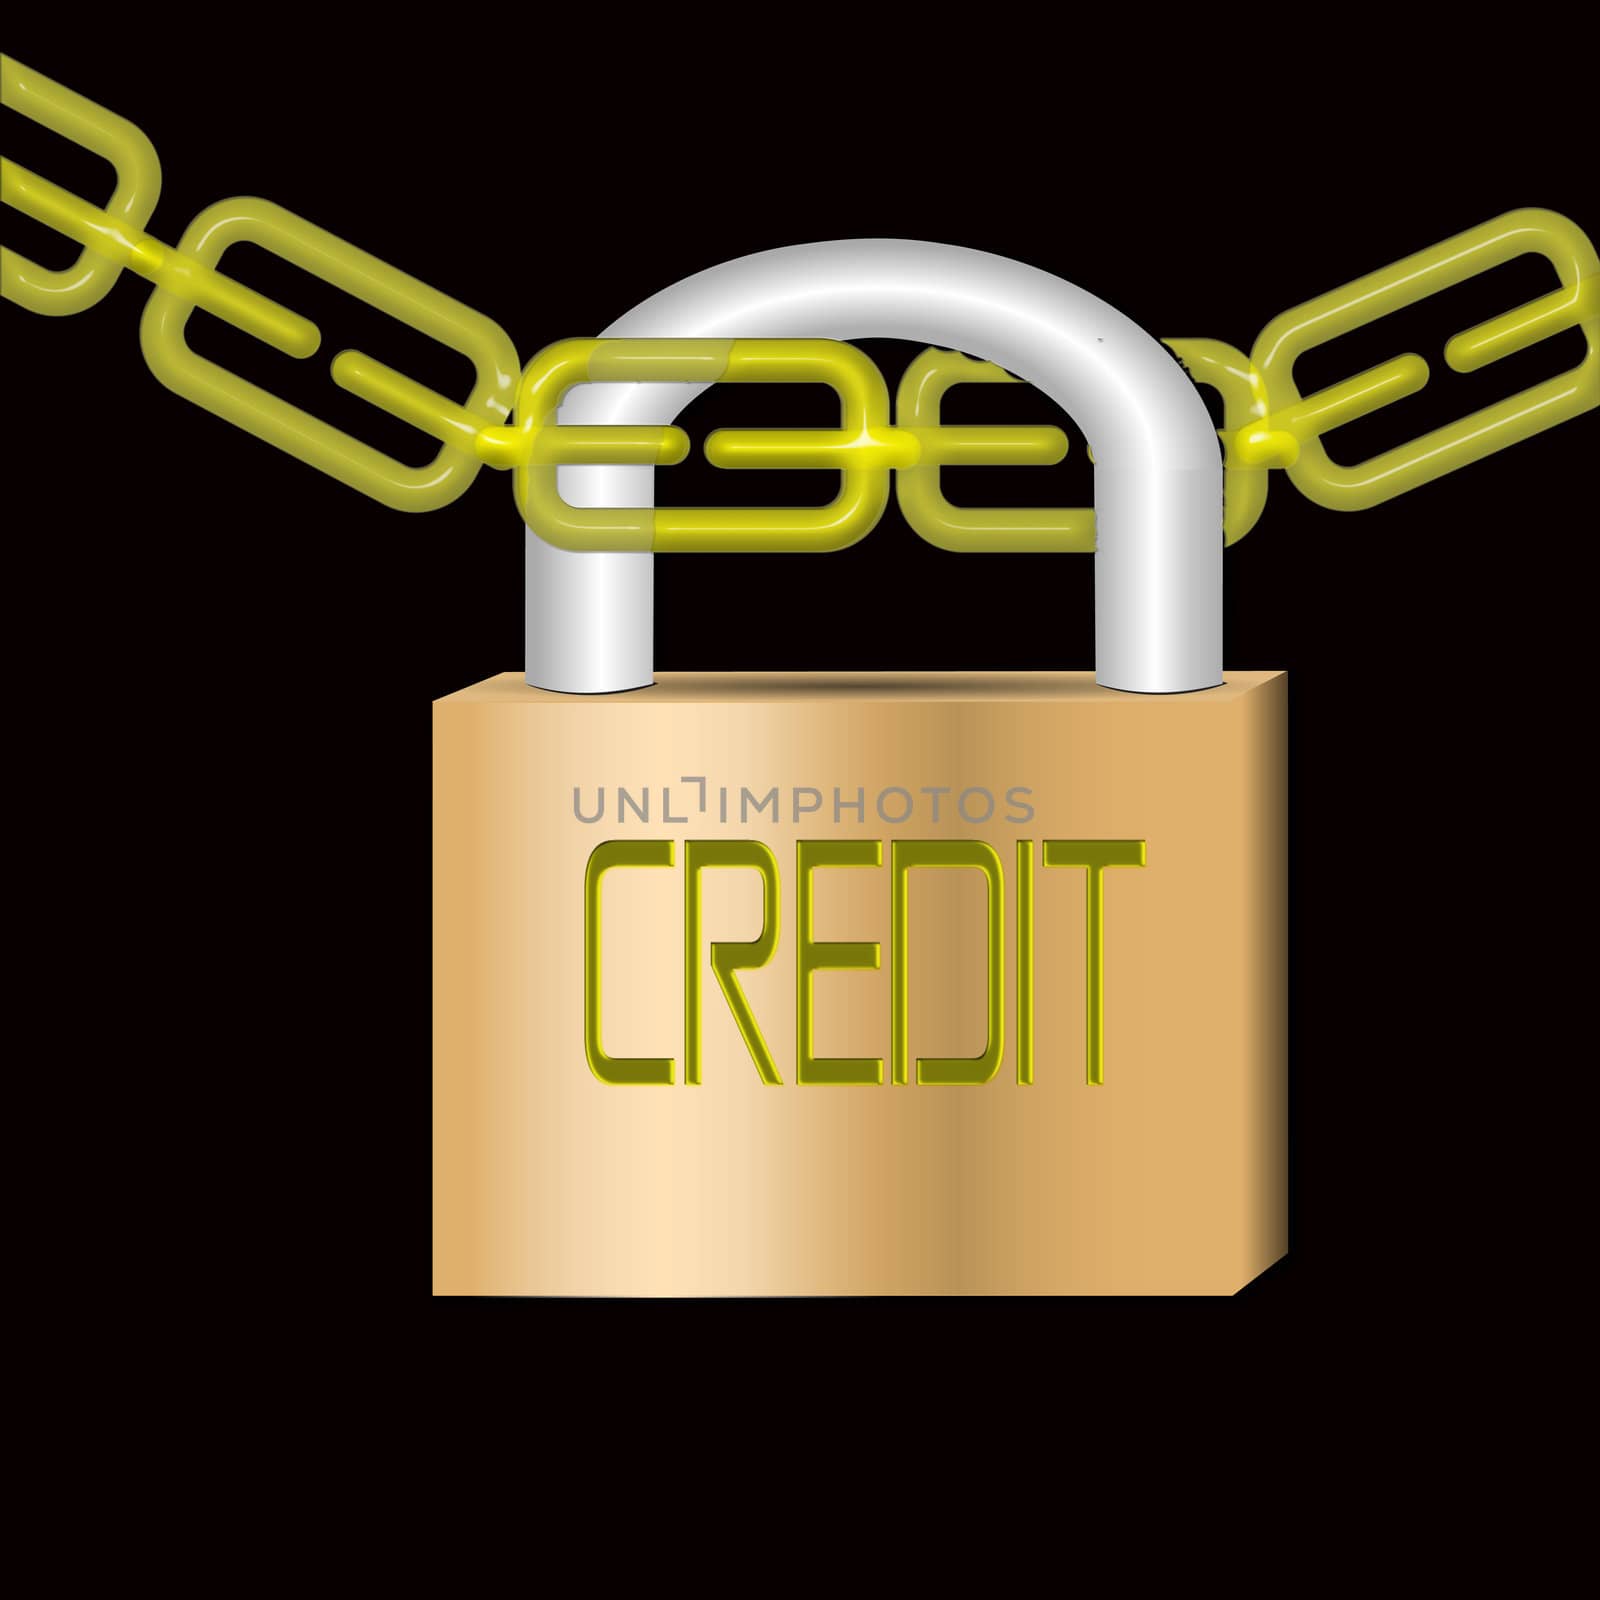 Credit Control by nadil